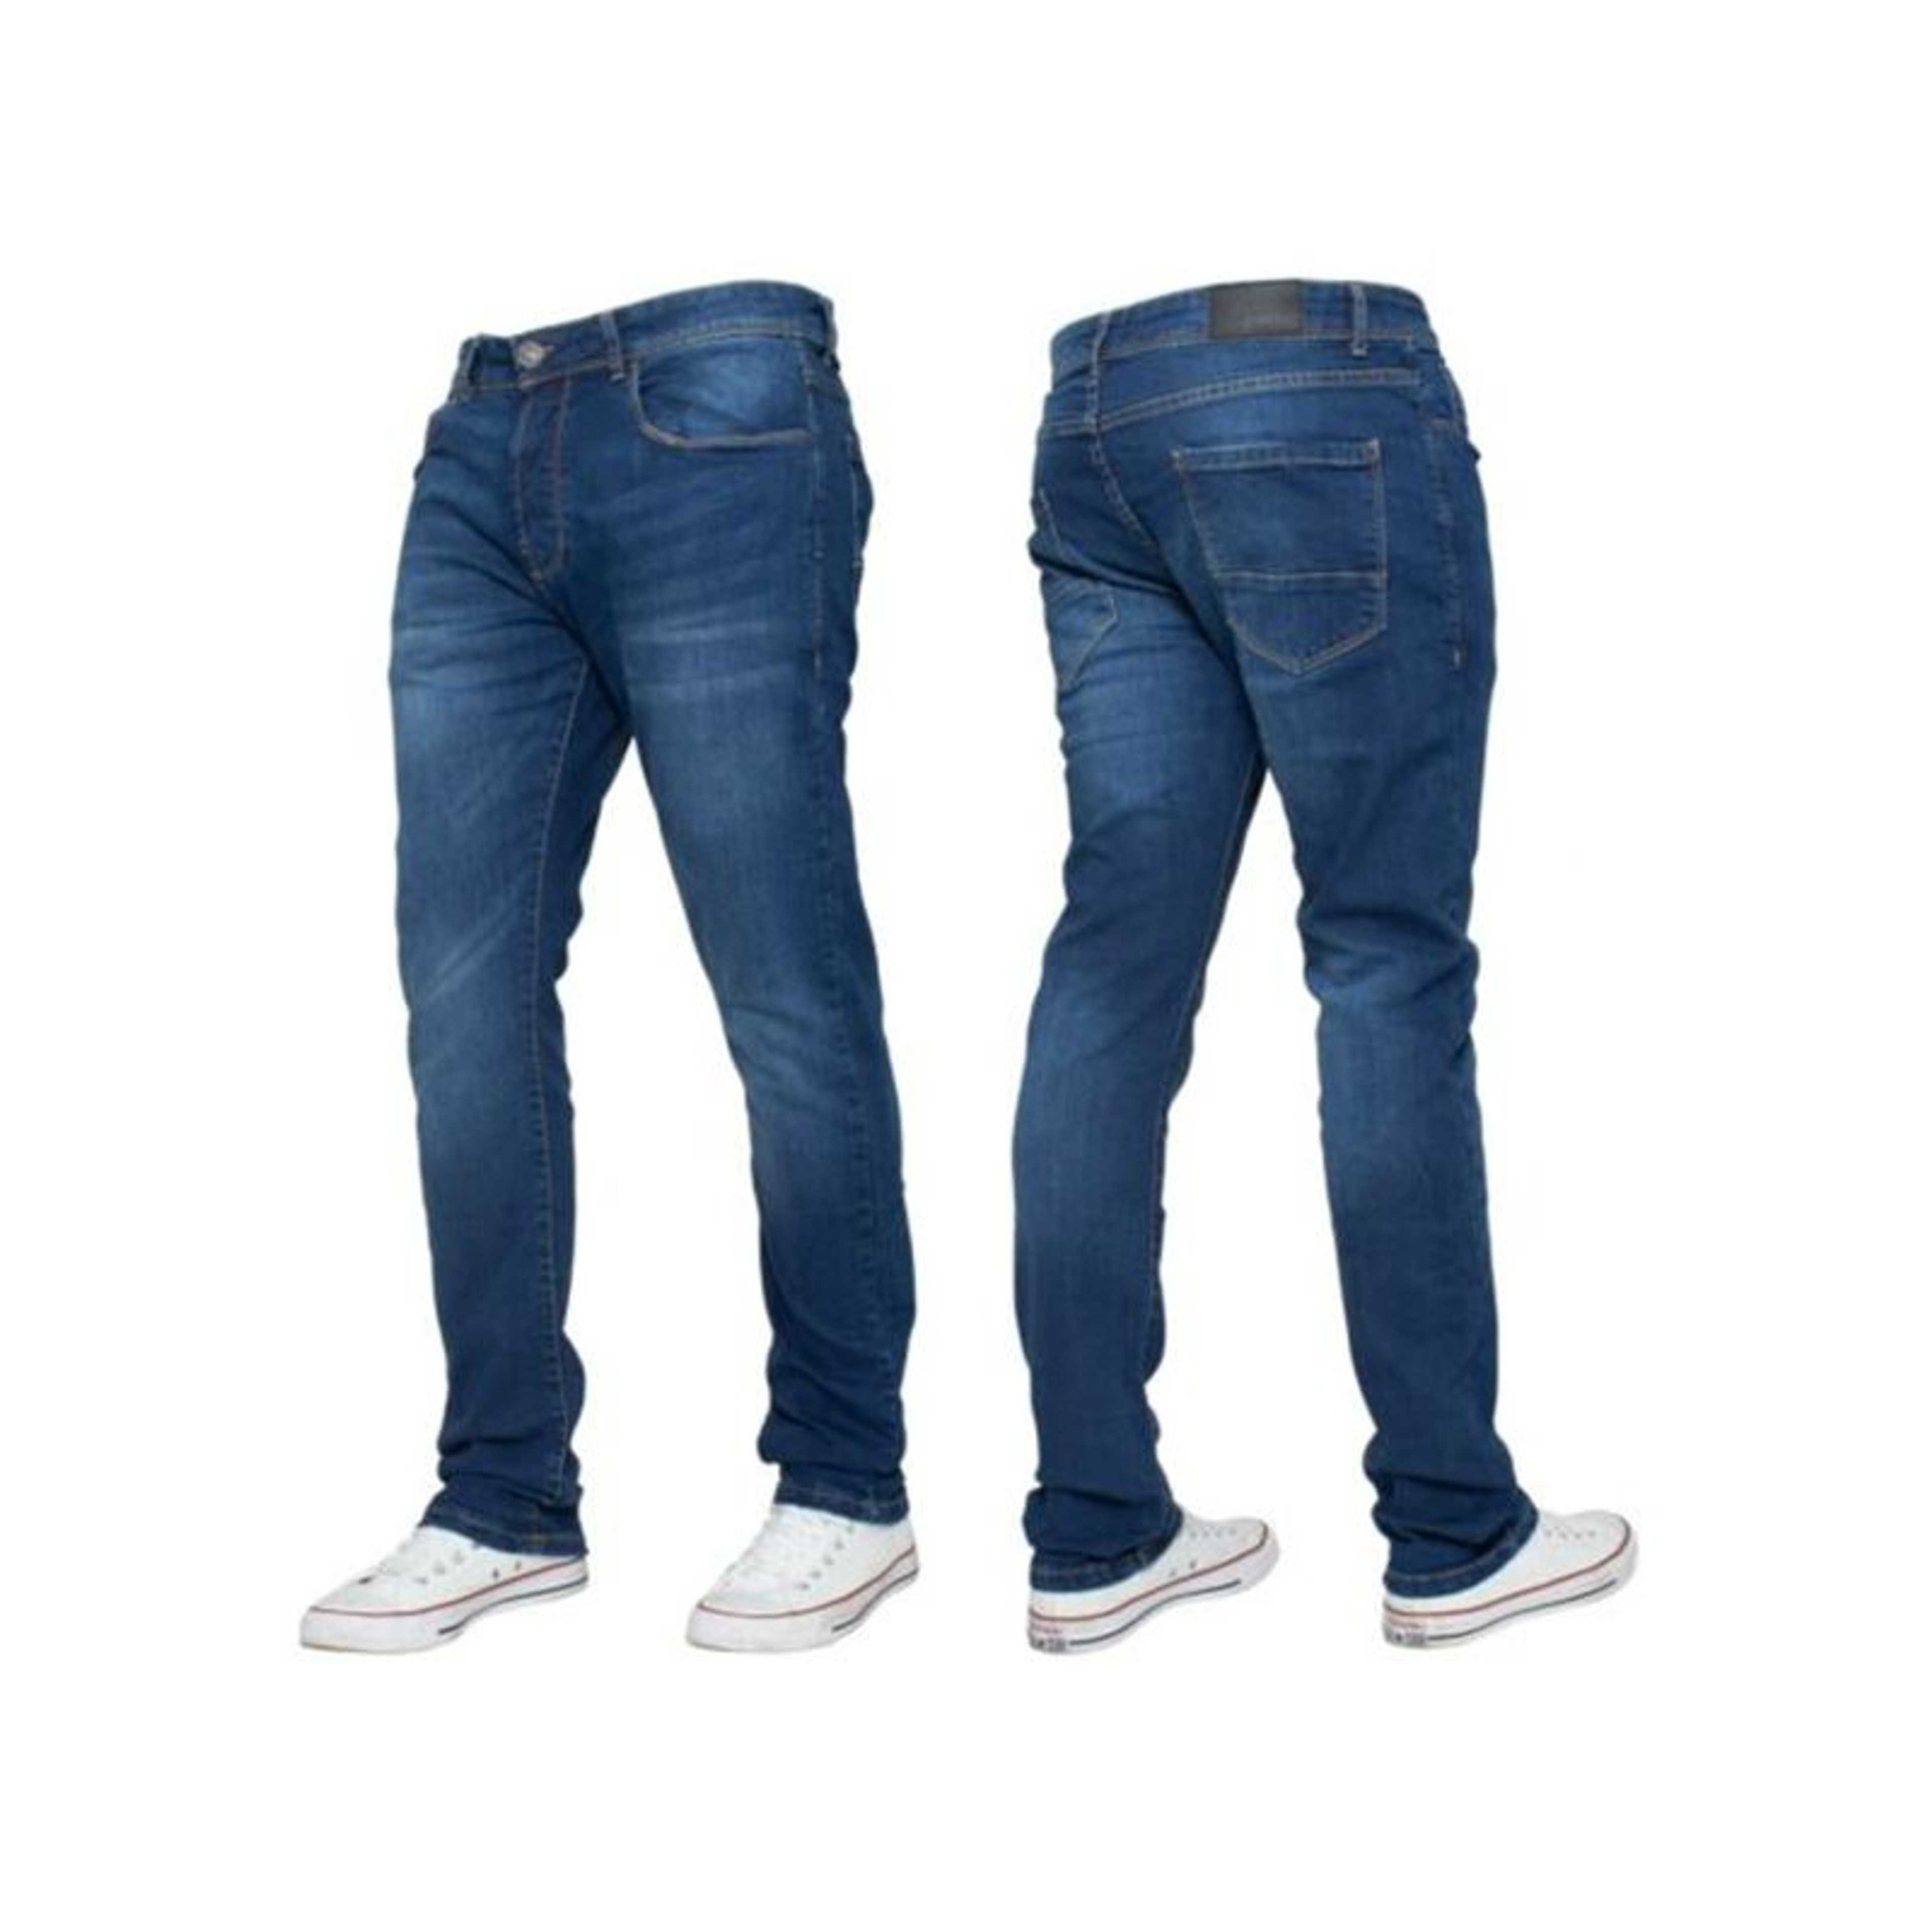 Rubahas Men’s Slim Fit Denim Jeans Pant in Blue Color